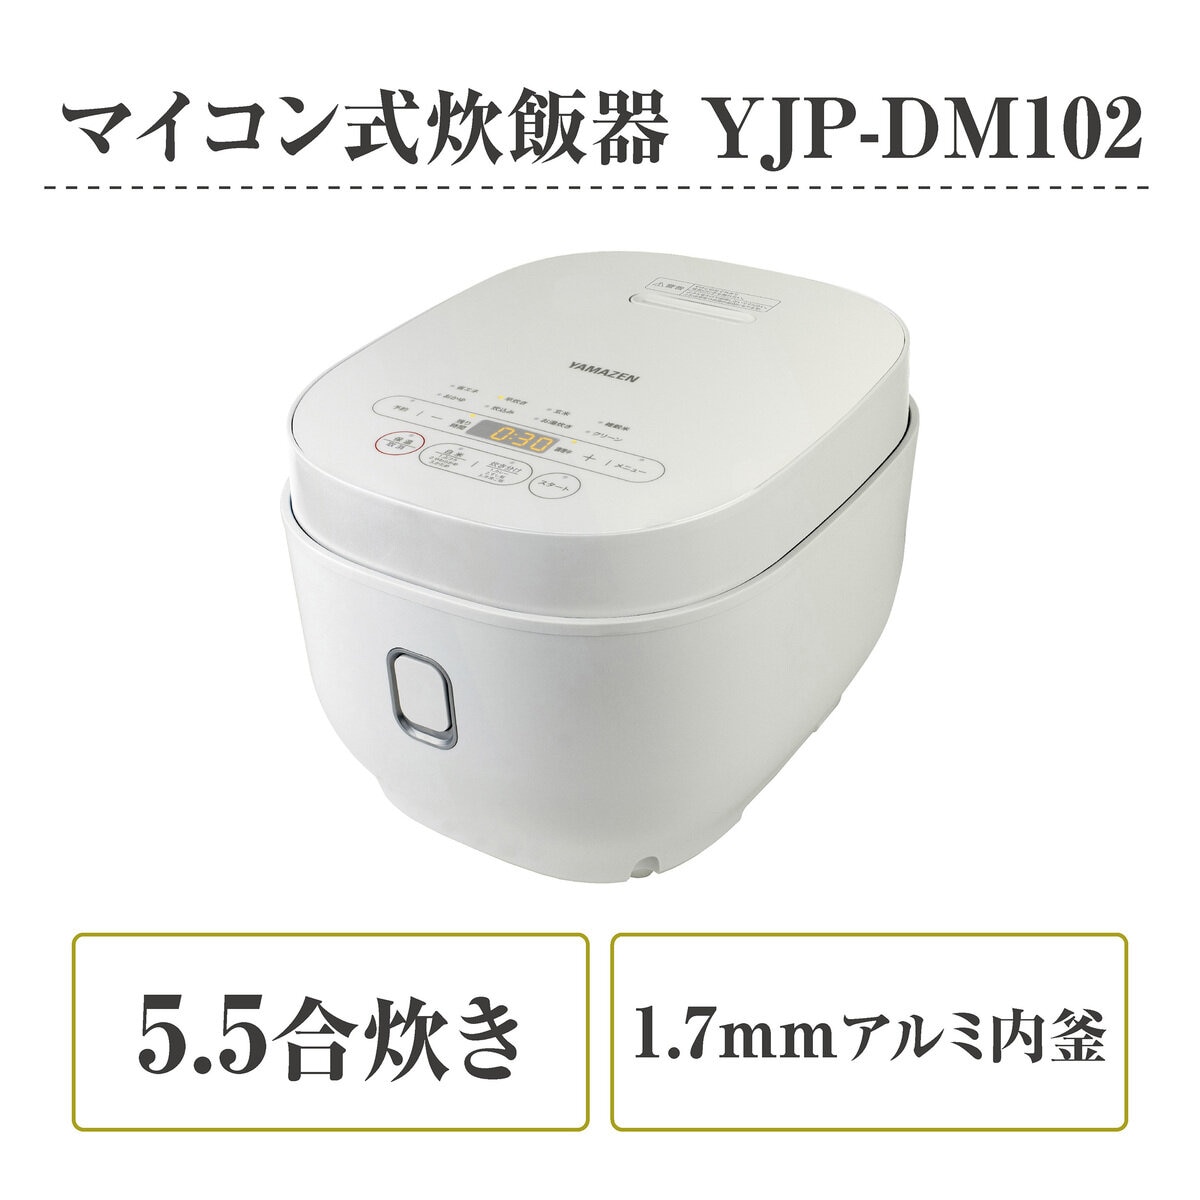 YAMAZEN 5.5合マイコン炊飯器 YJP-DM102 | Costco Japan